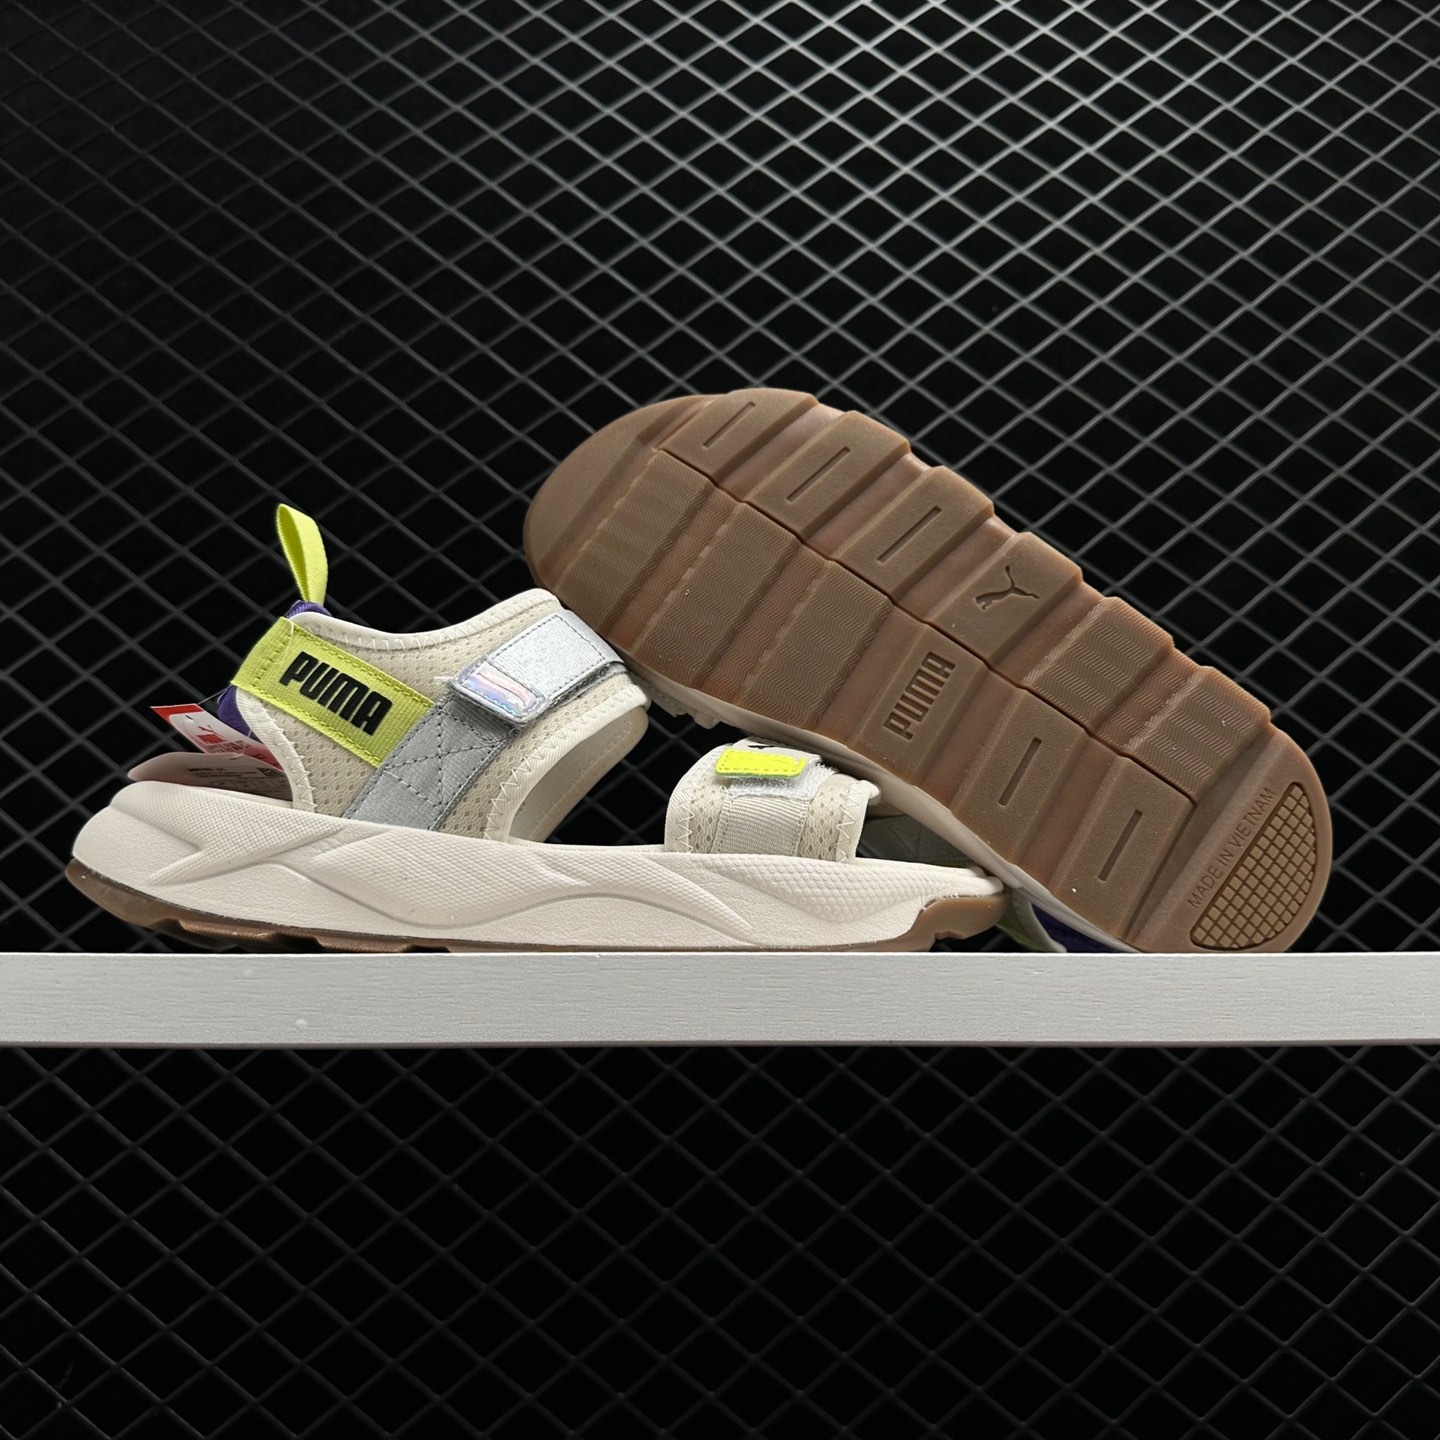 Puma RS-Sandal Iridescent White Gum 368763 01 – Stylish and Comfy Footwear